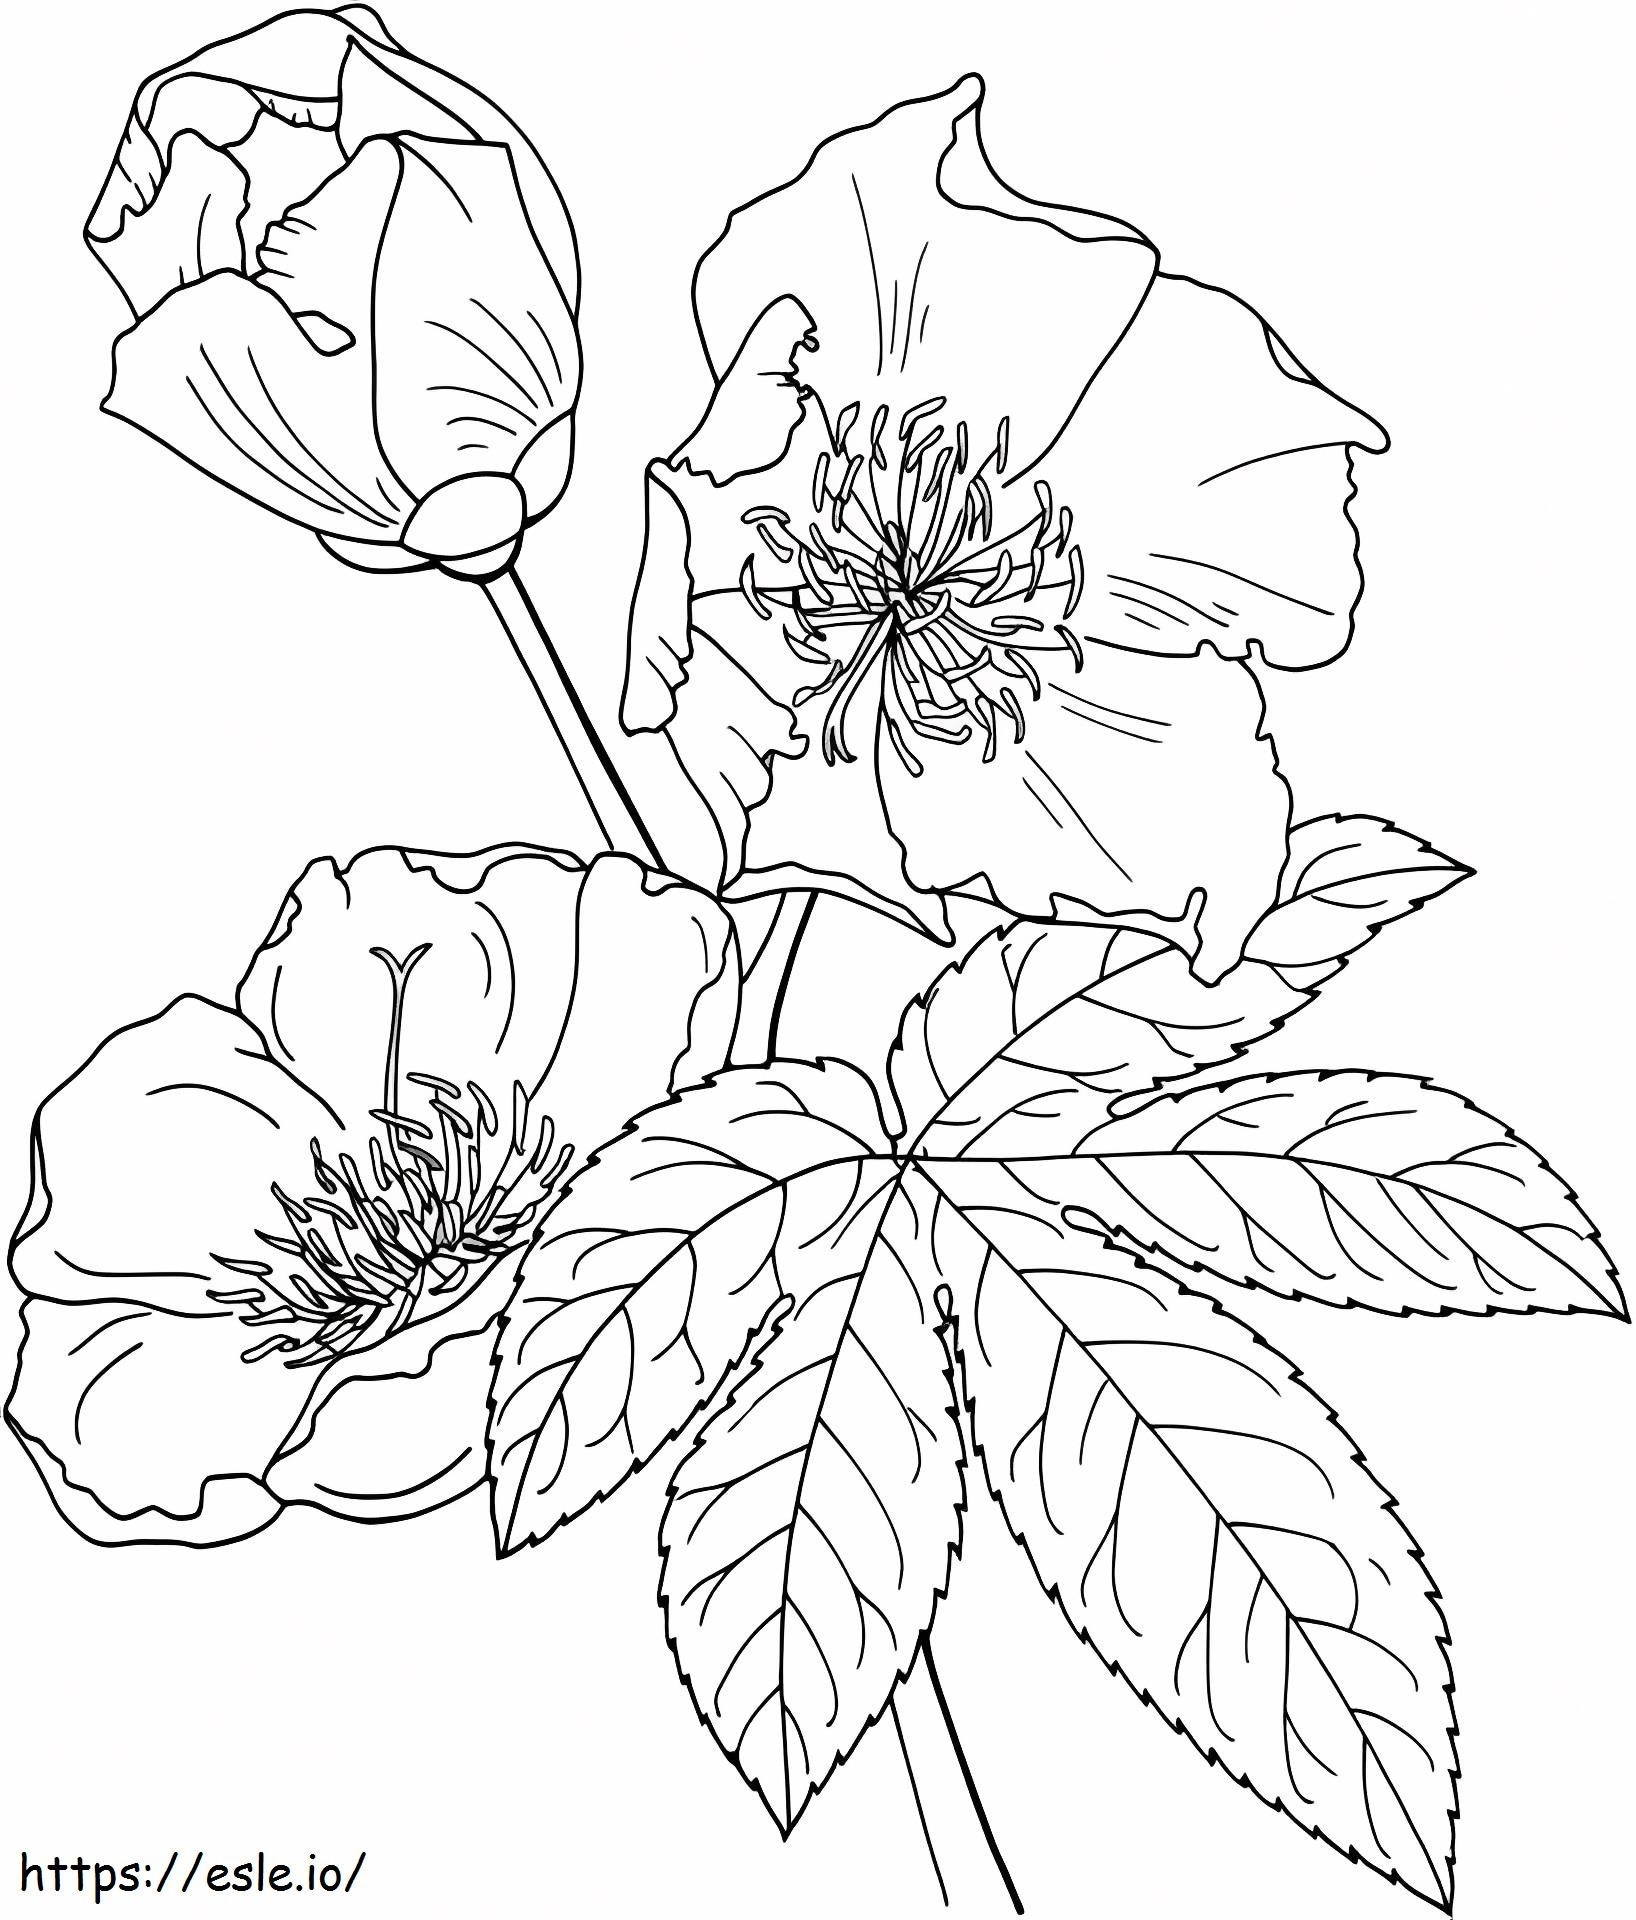 1527065135_Cochlospermum Vitifolium Or Buttercup Tree coloring page